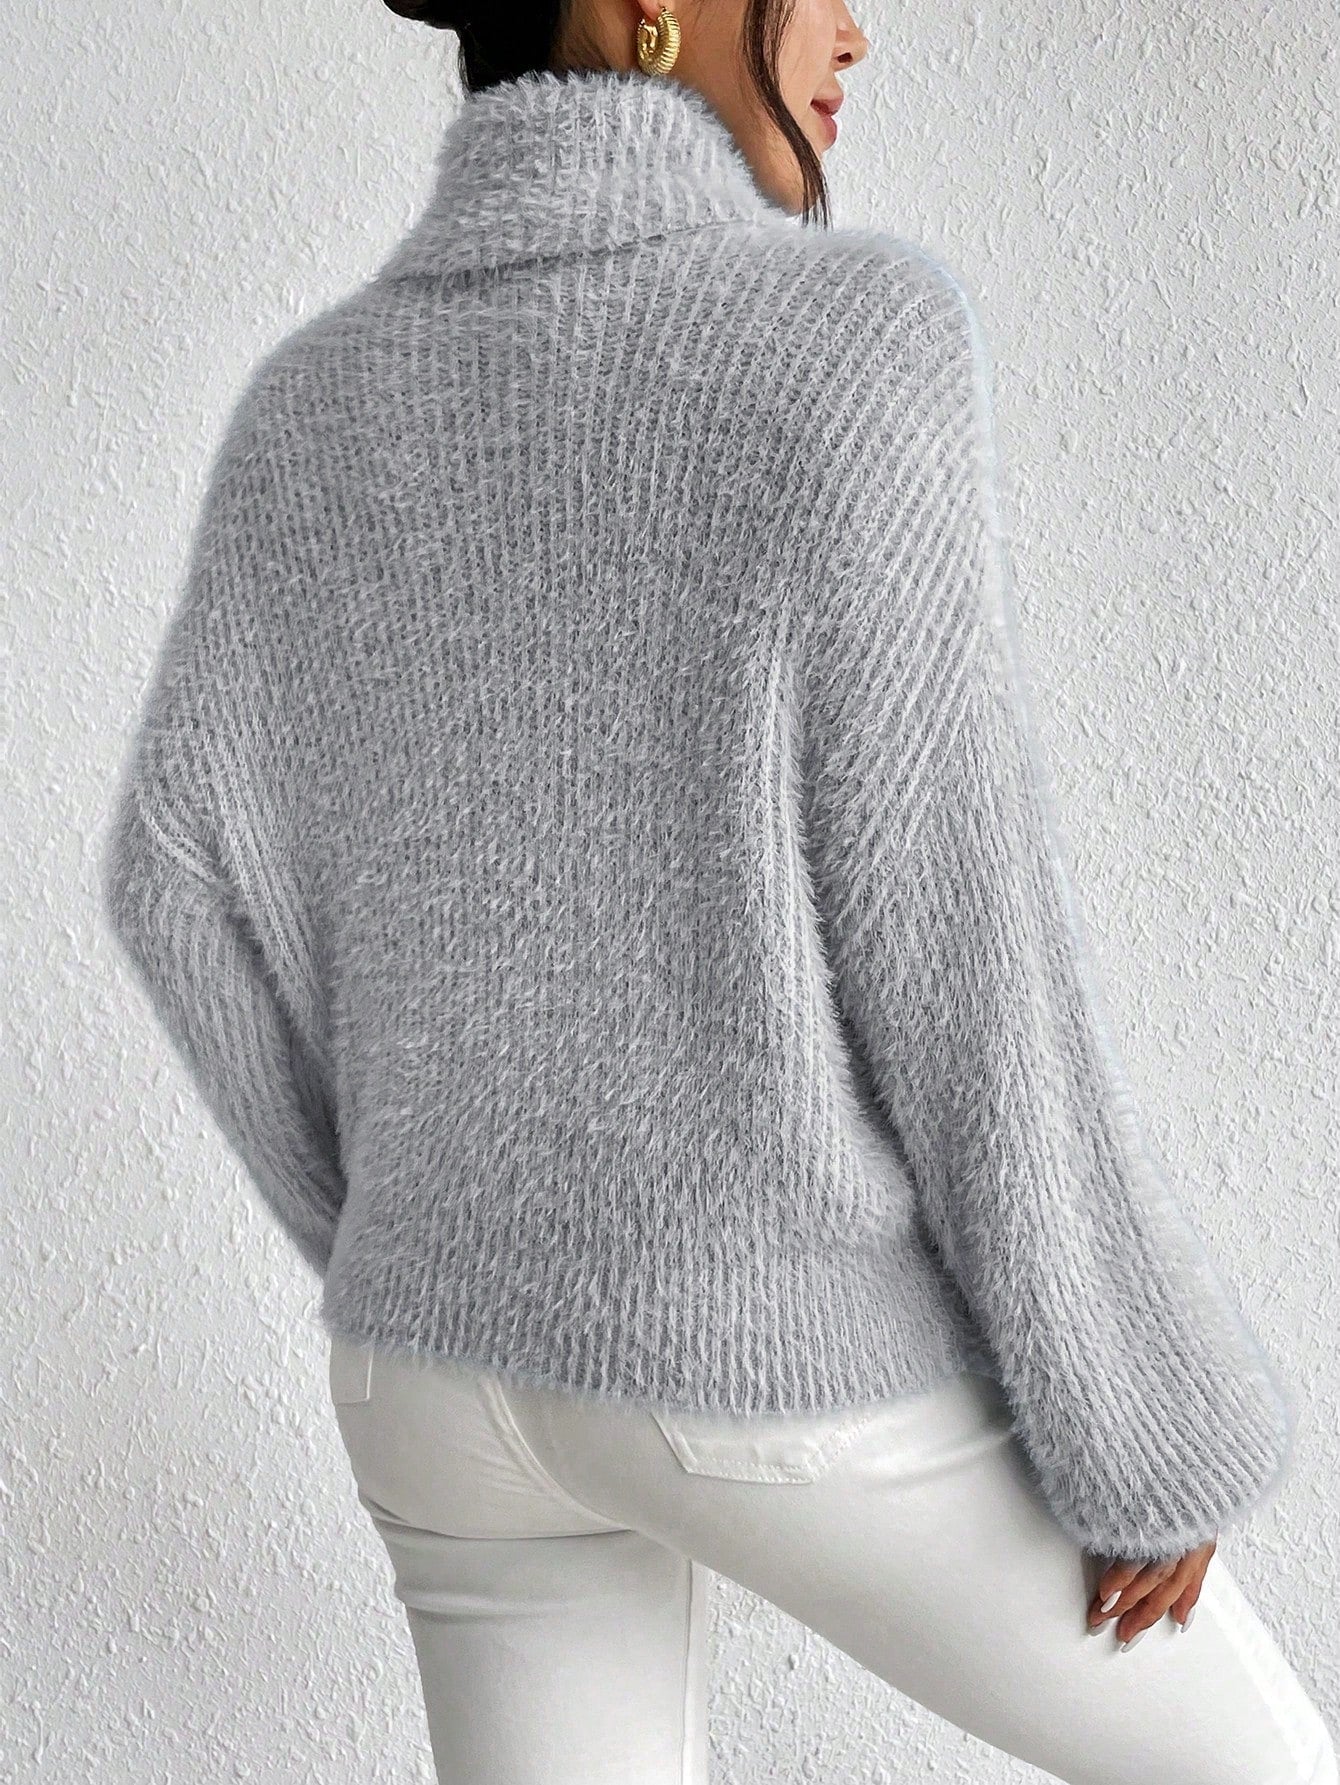 Essnce Women's Turtleneck Drop Shoulder Pullover Sweater